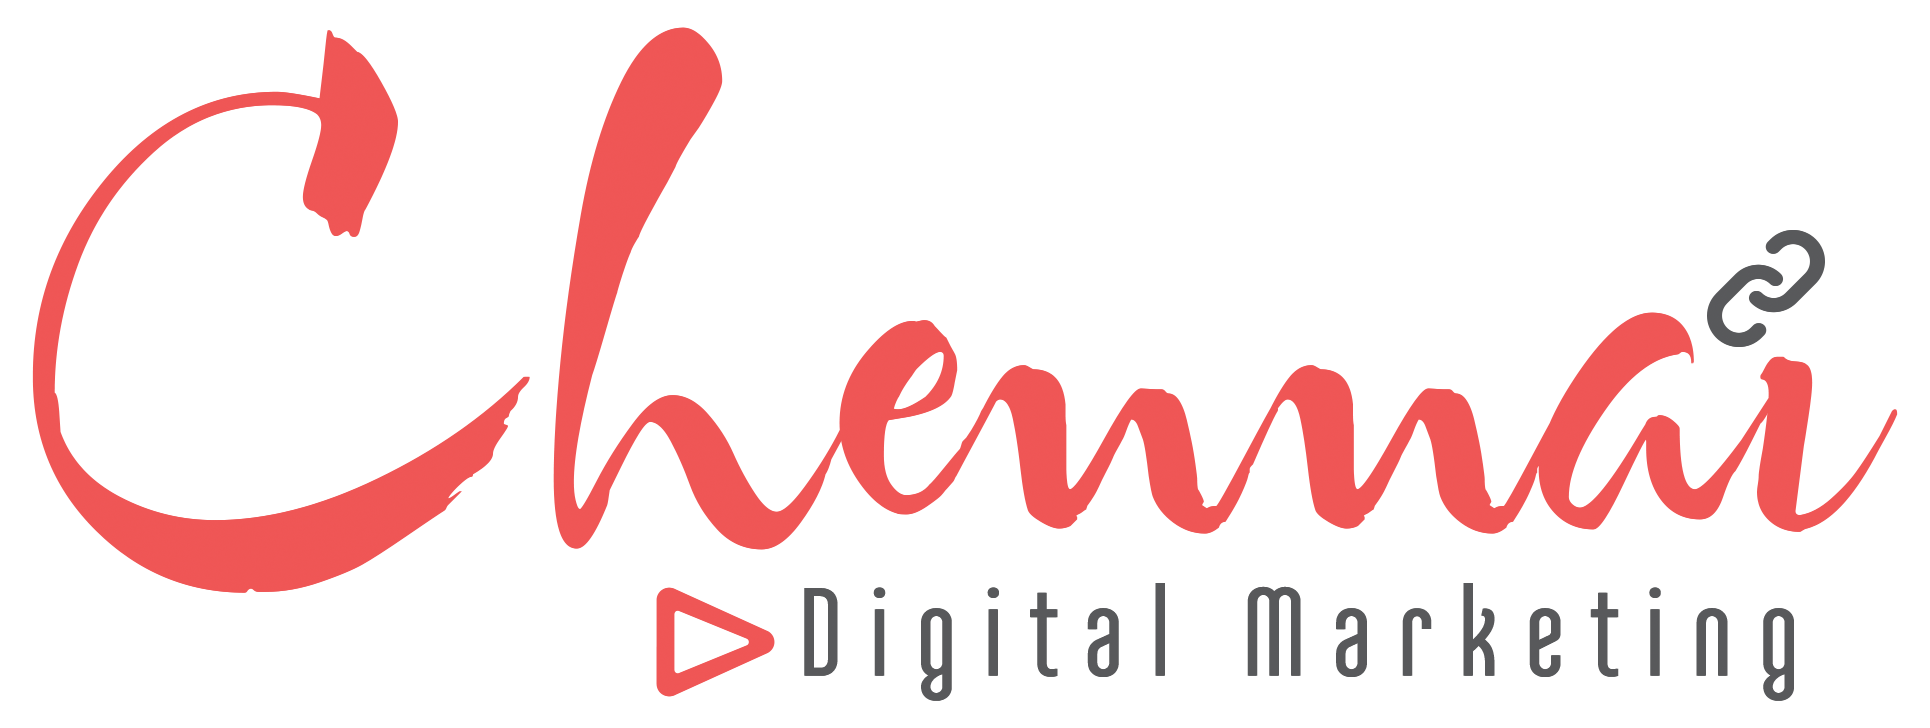 digital marketing services in chennai